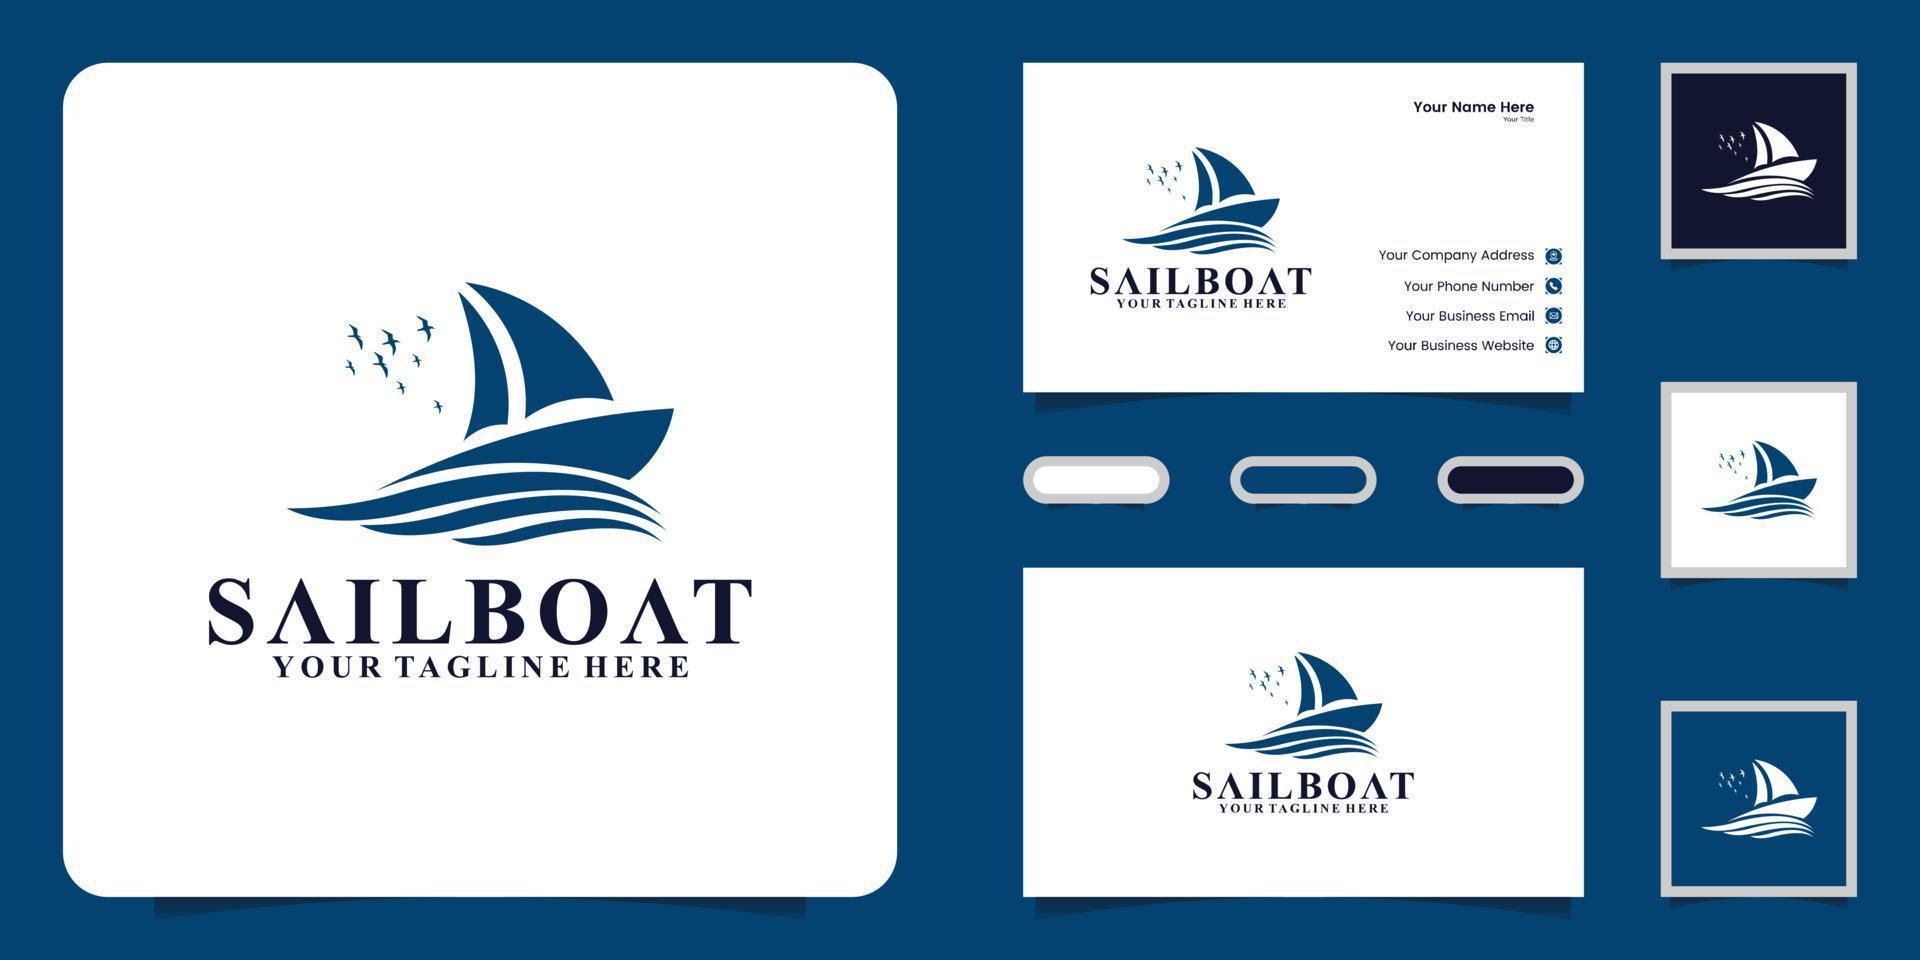 sailboat logo design inspiration and business card inspiration vector